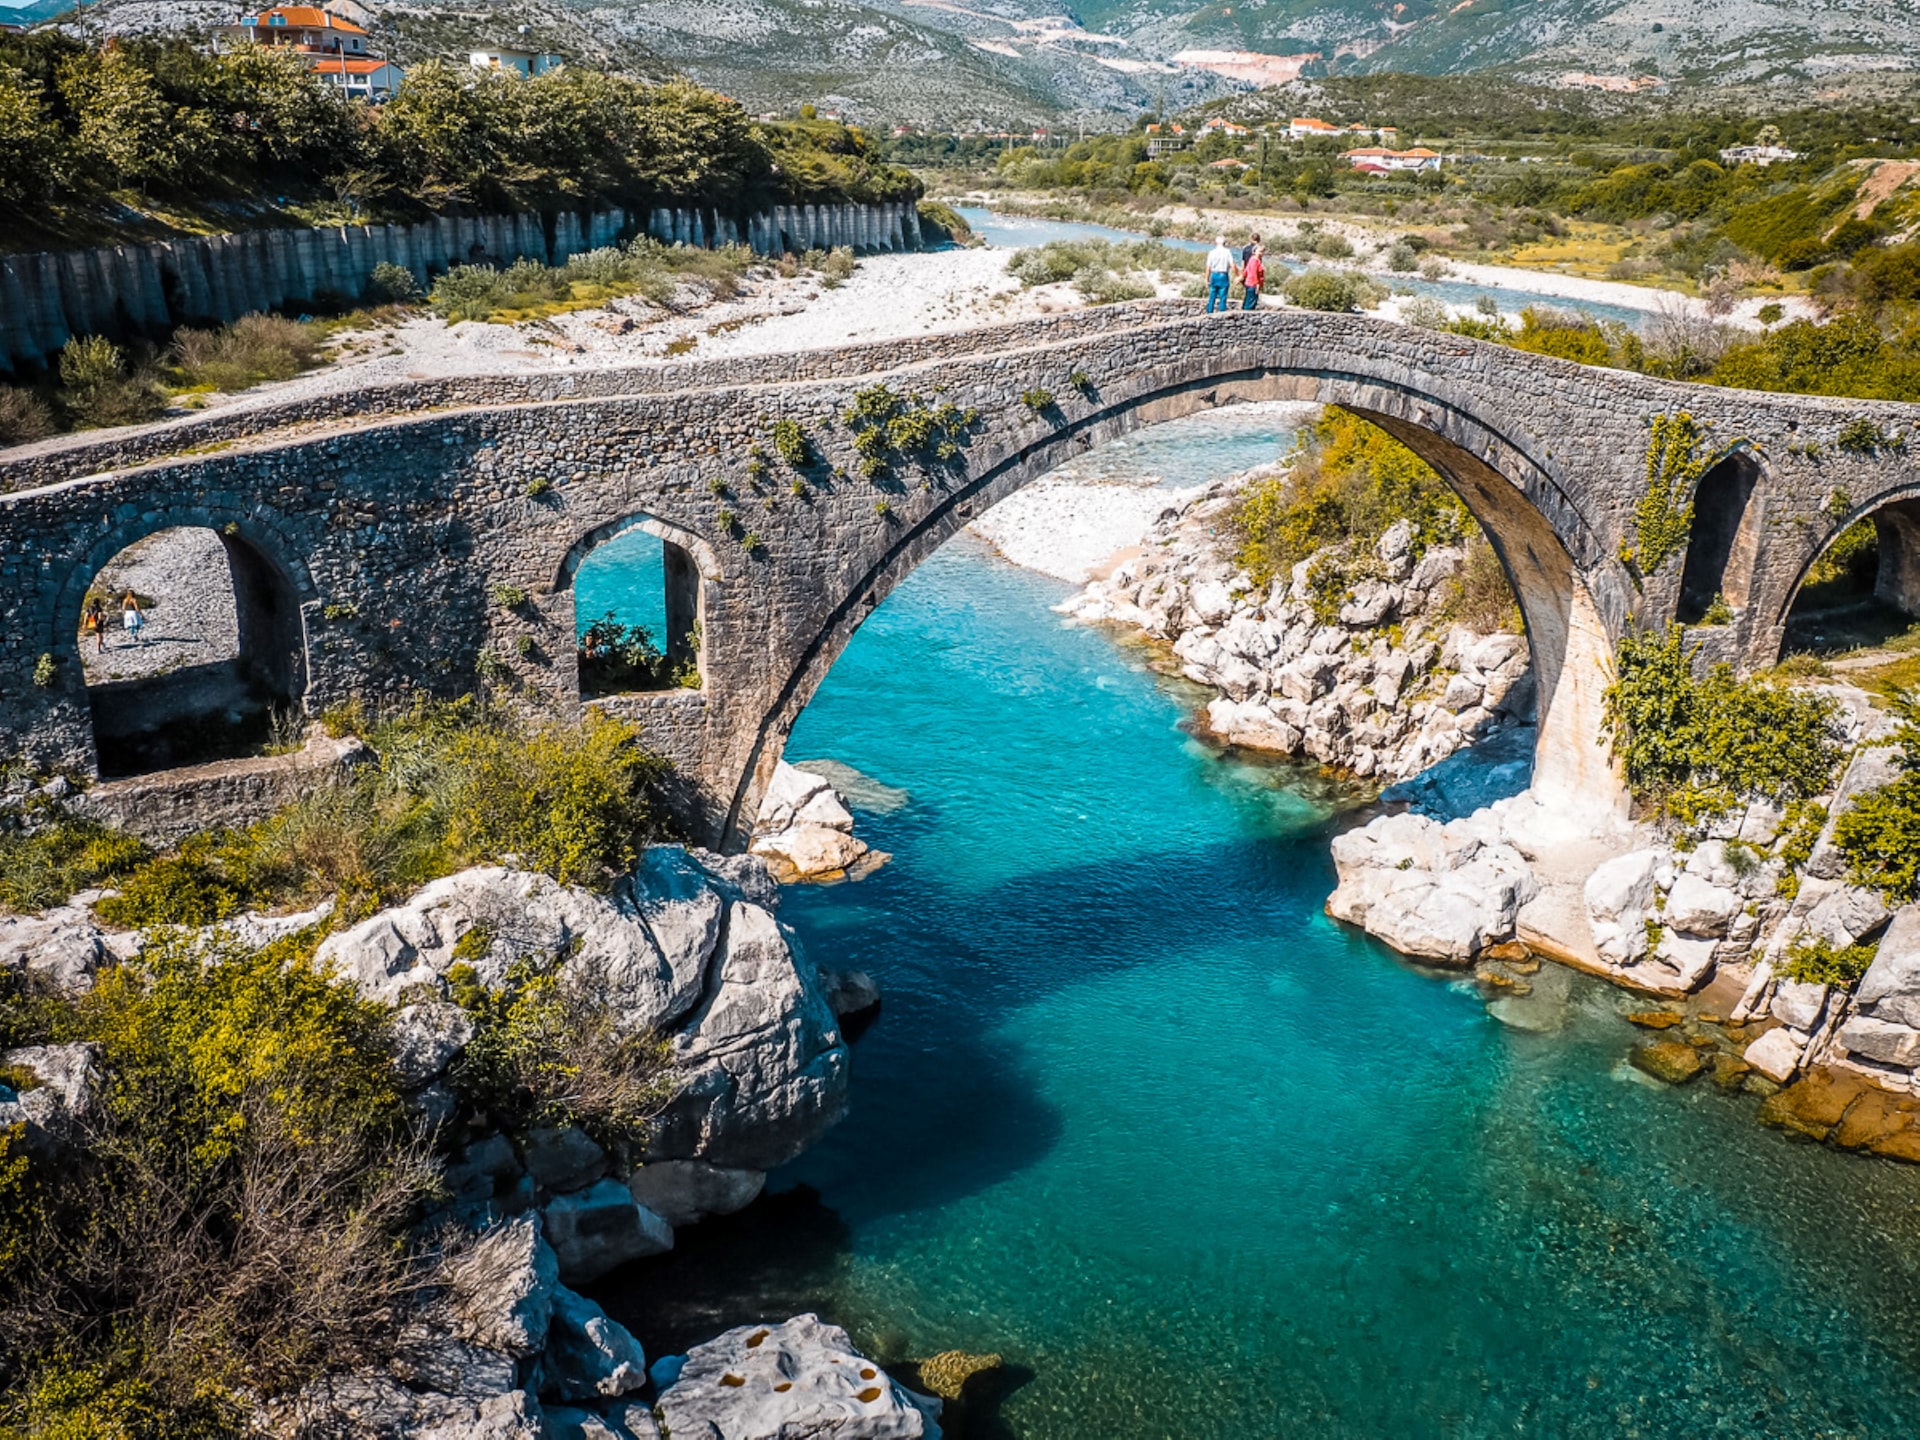 Mesi Bridge (Ura e mesit) in Shkodra